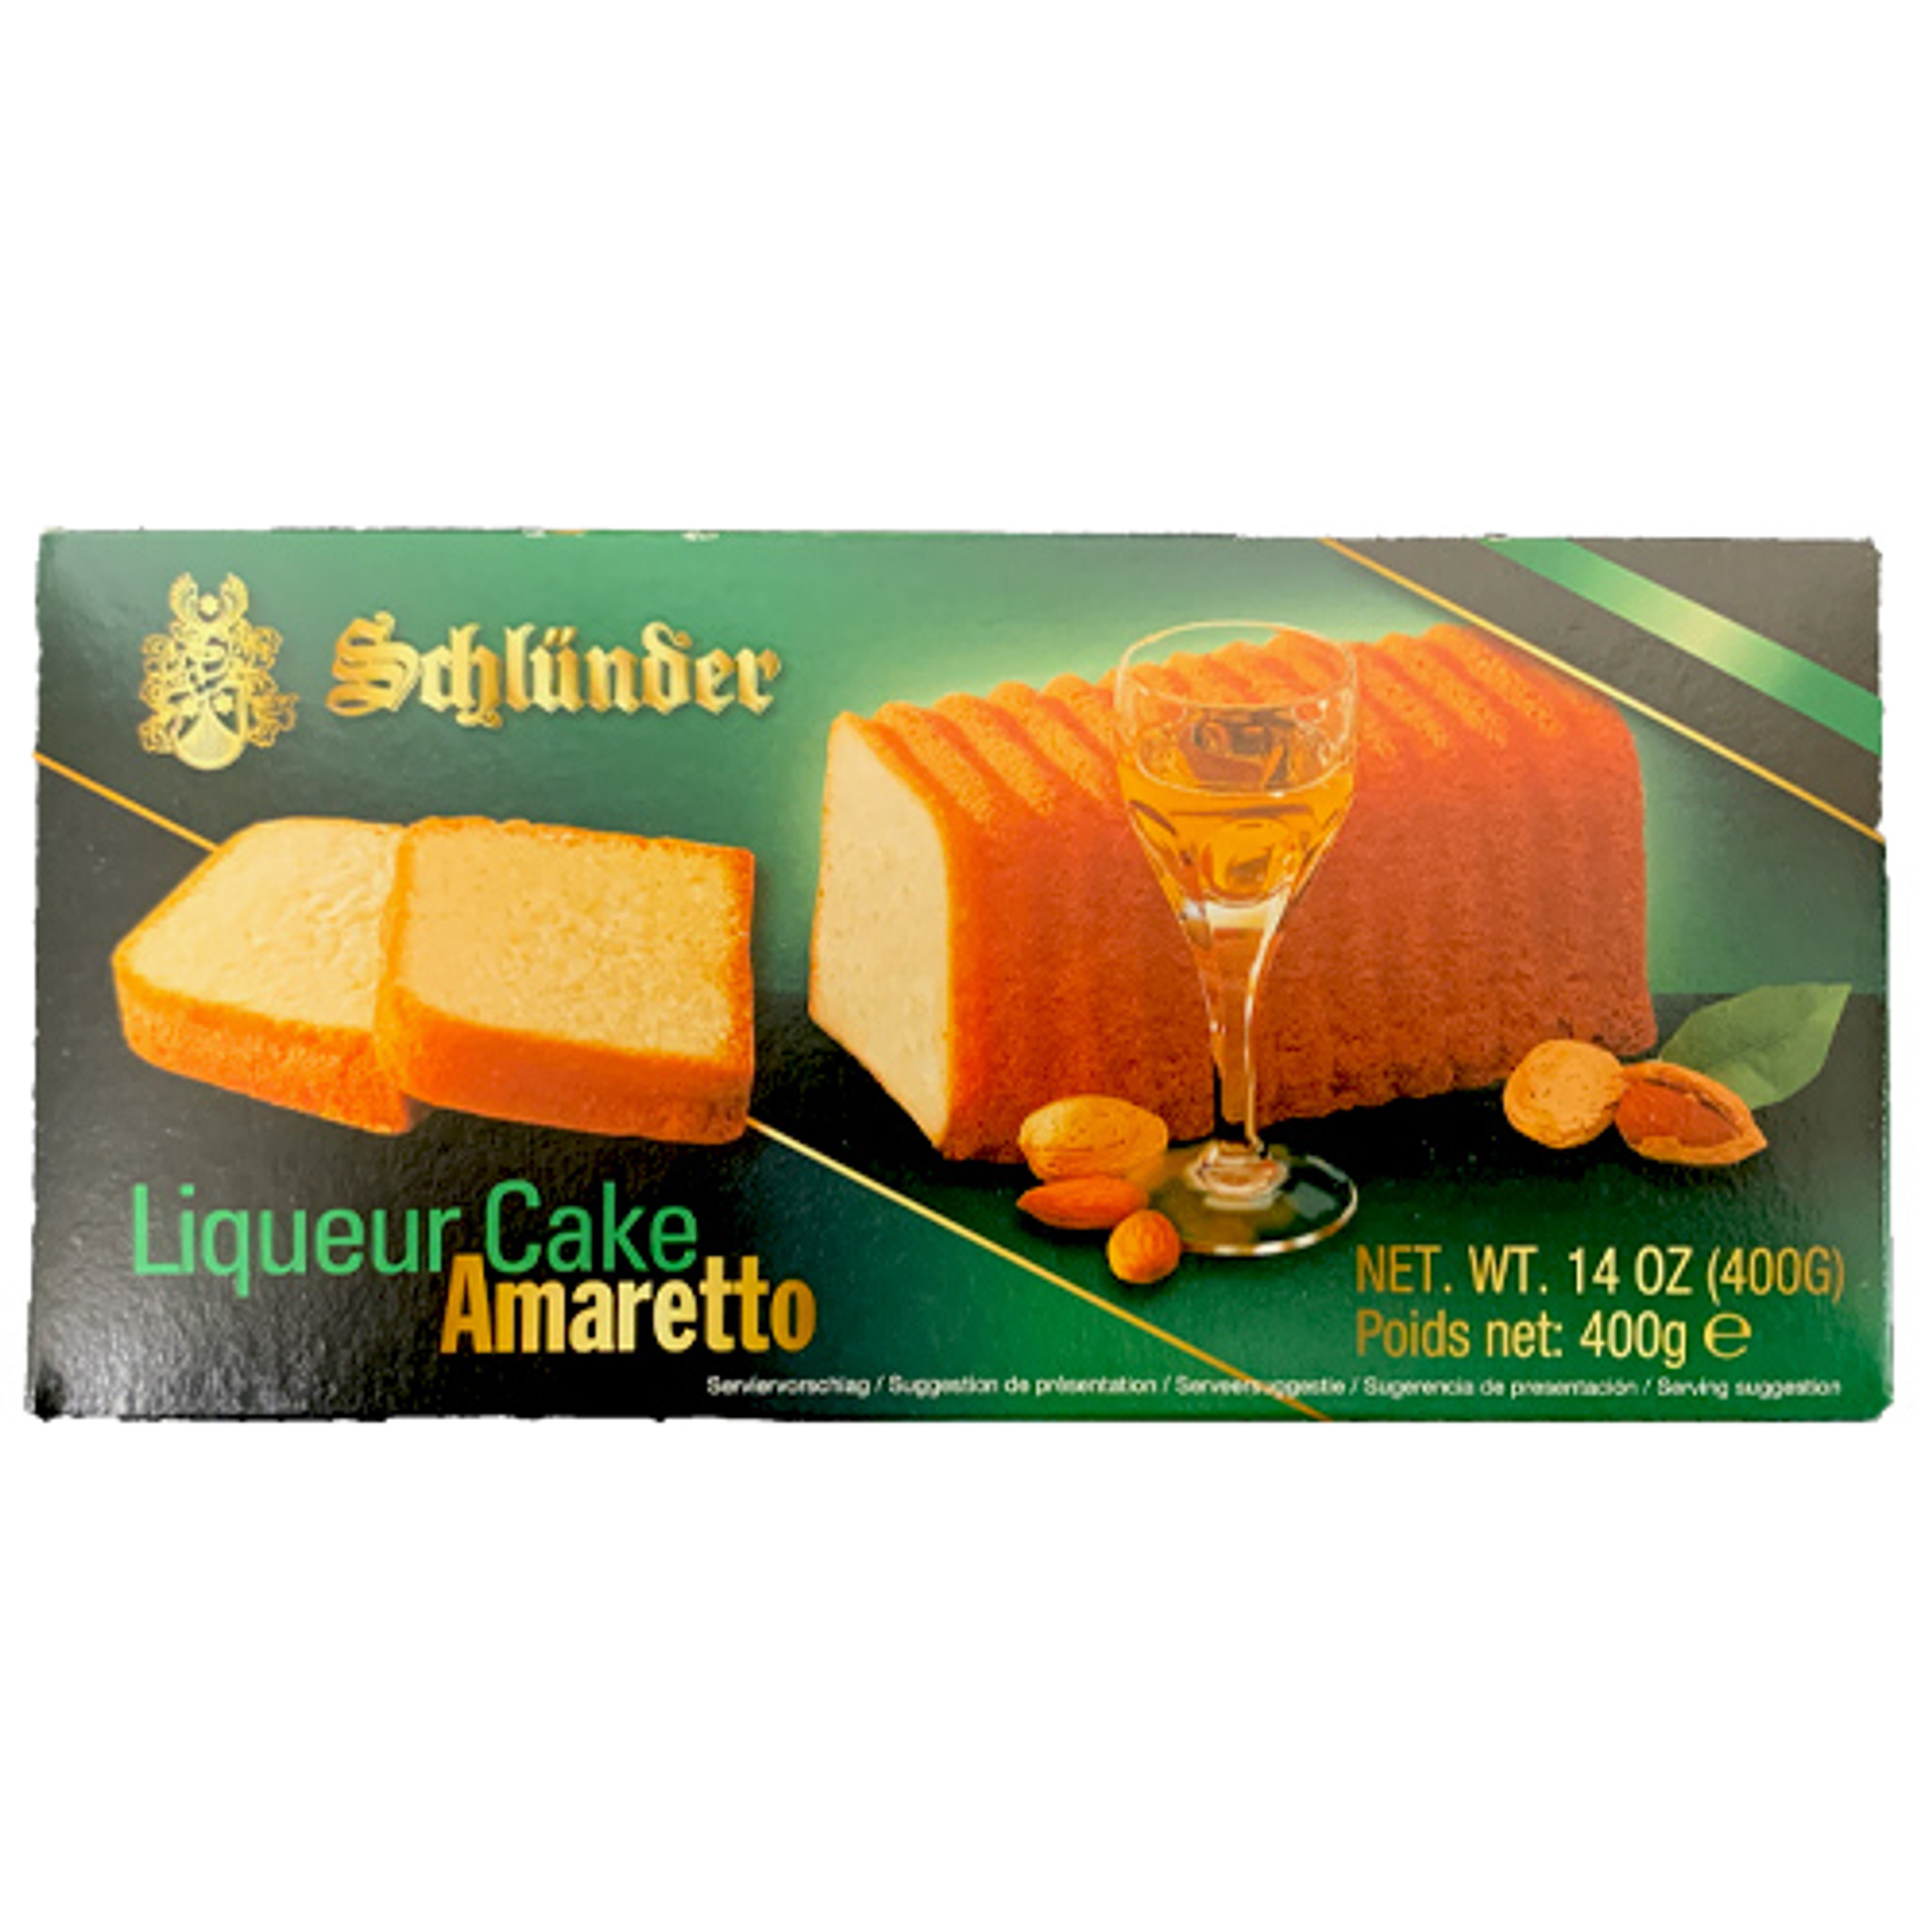 Uitbreiden Autonoom Petulance Schluender Amaretto Liqueur Cake 14 oz. - The Taste of Germany